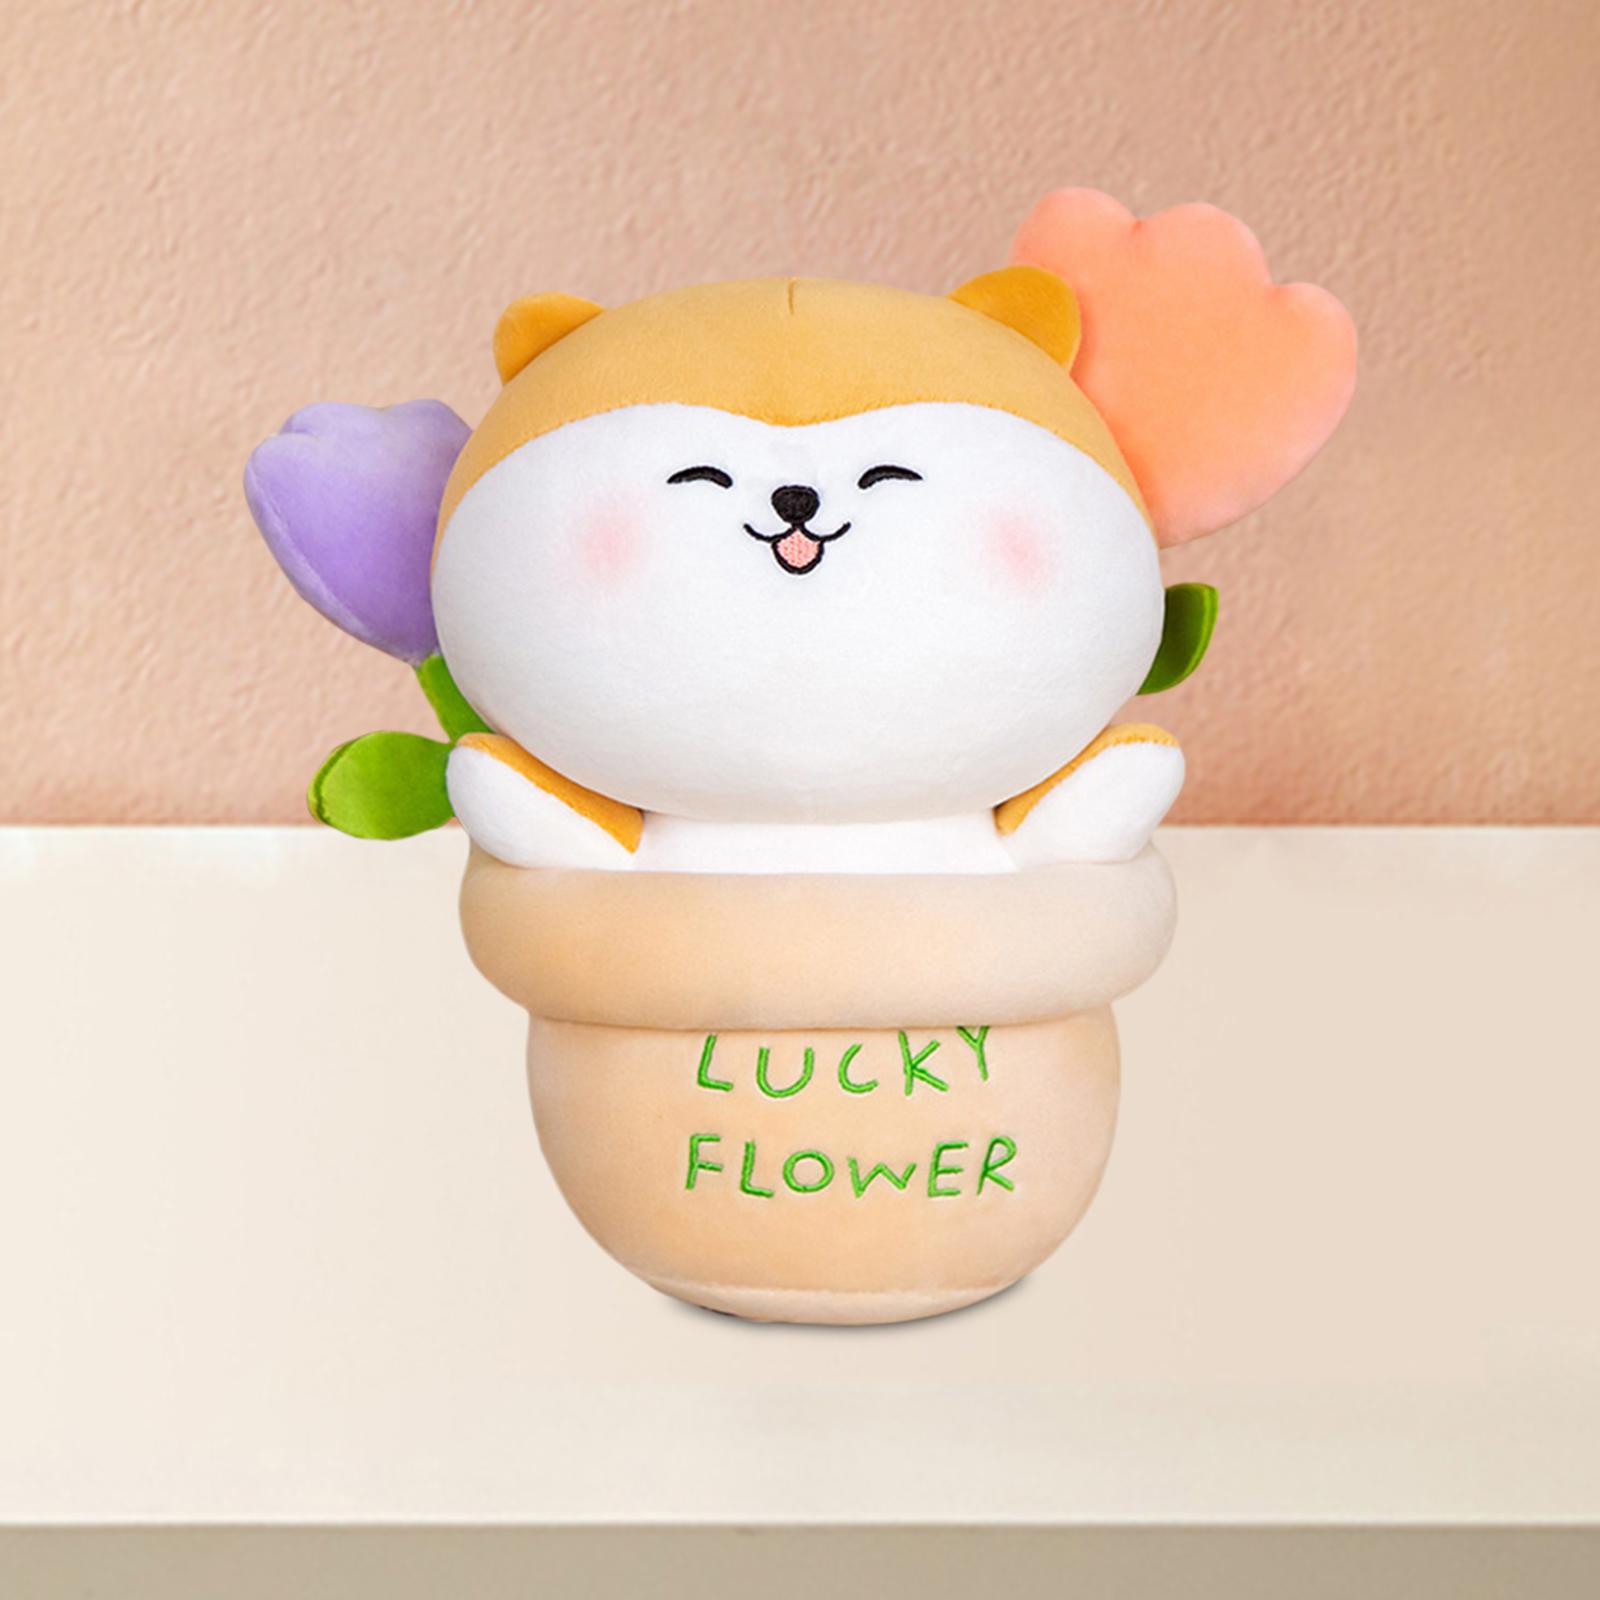 Stuffed Animal Soft Plush Toy Room Decor for Kids Birthday Gifts Shiba Inu